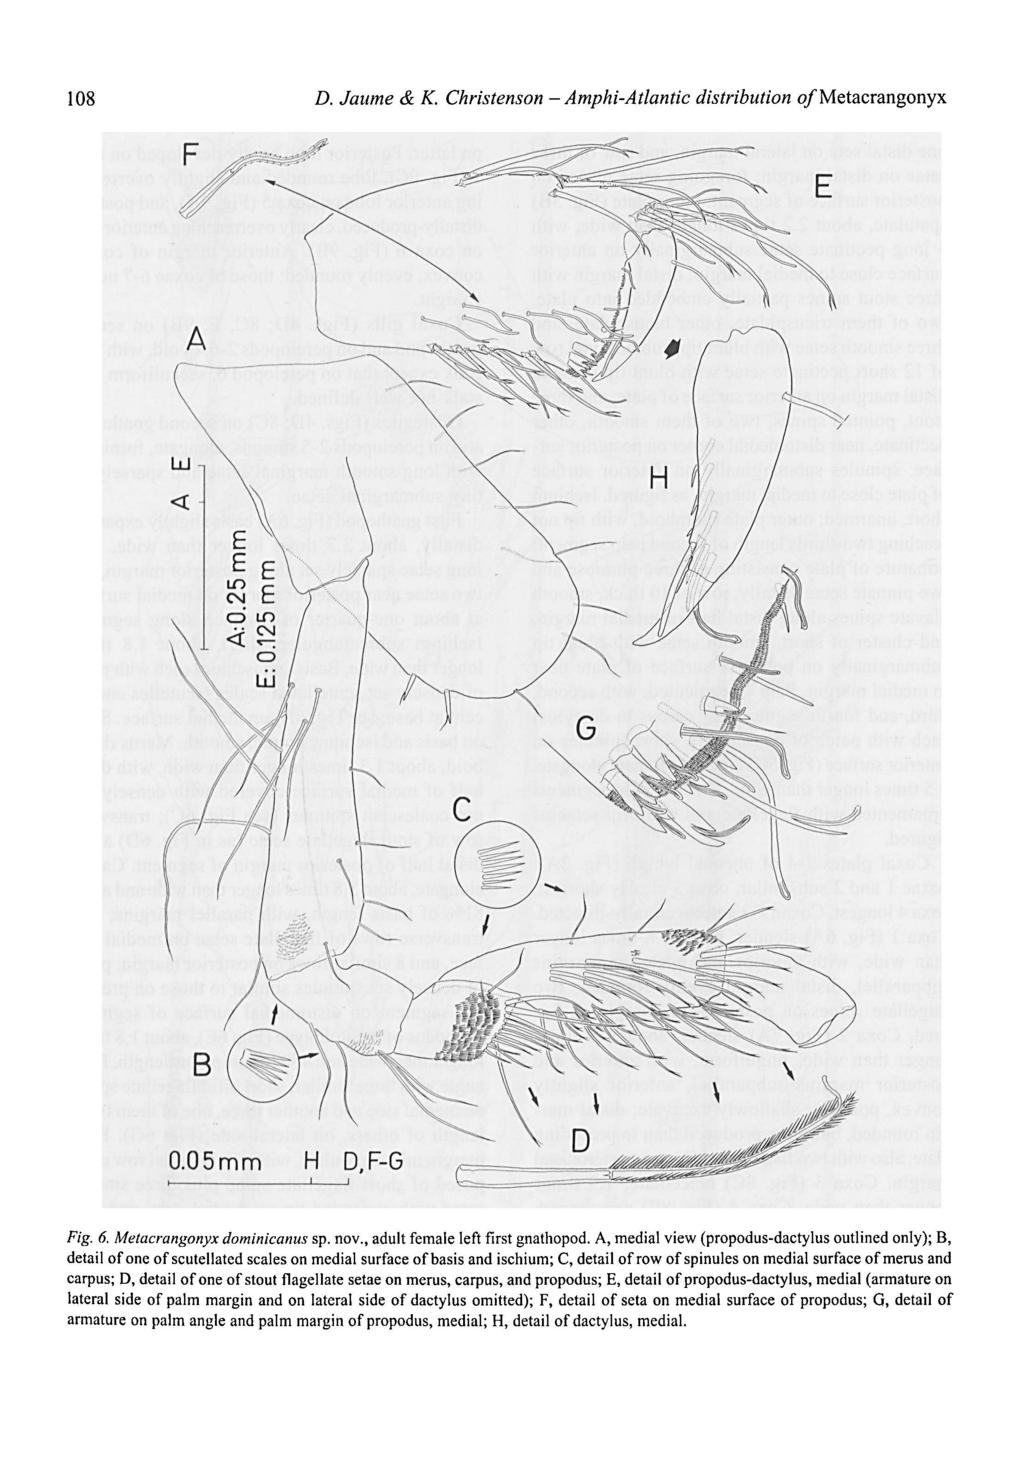 Amphi-Atlantic 108 [). Jaume & K. Christenson - distribution o/metacrangonyx Fig. 6. Metacrangonyx dominicanus sp. nov., adult female left first gnathopod.